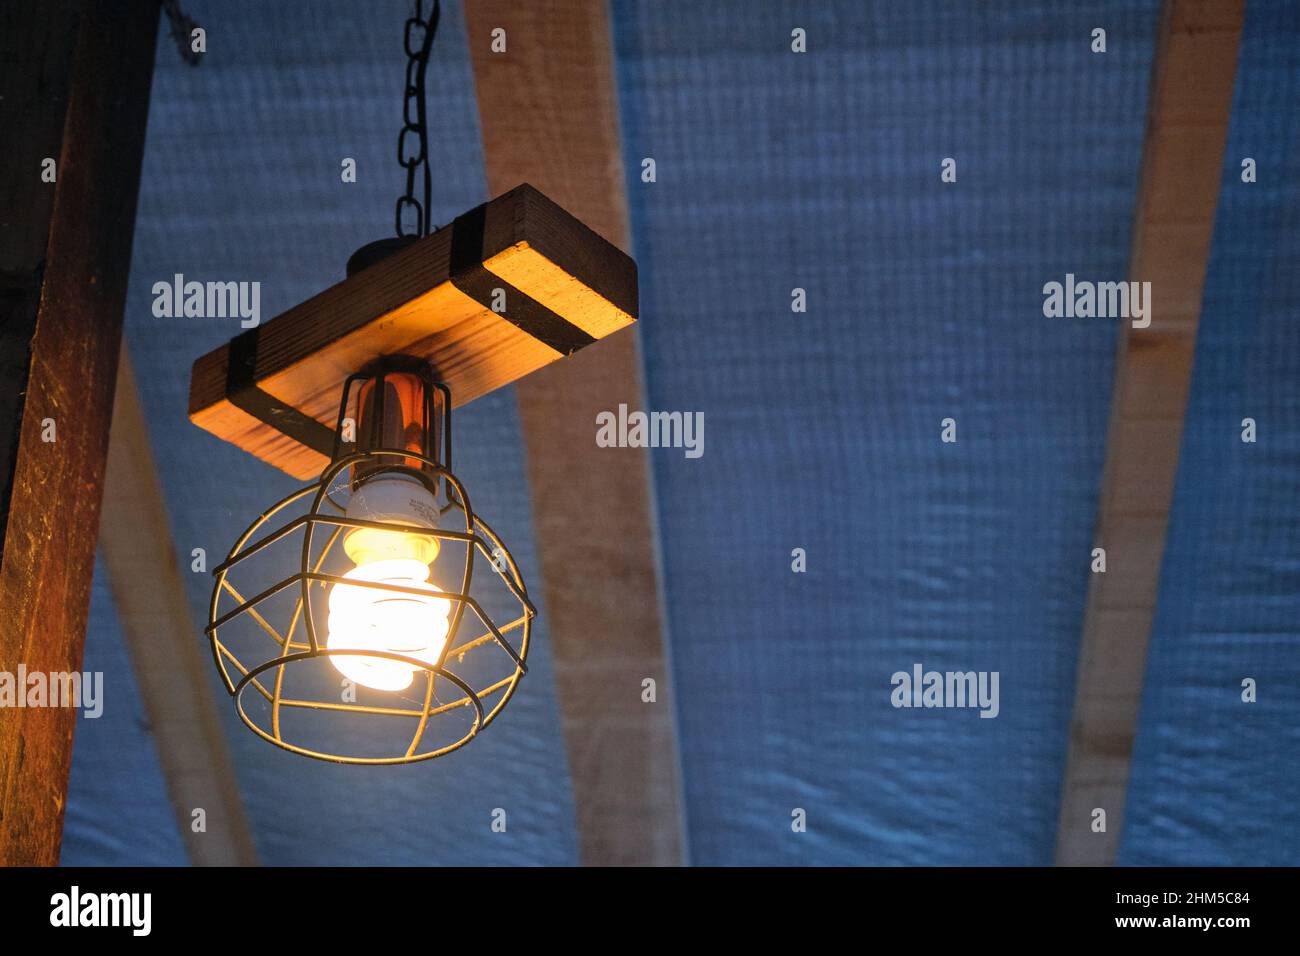 Lampada in stile vintage, lampada elettrica appesa a stab in legno. Foto Stock